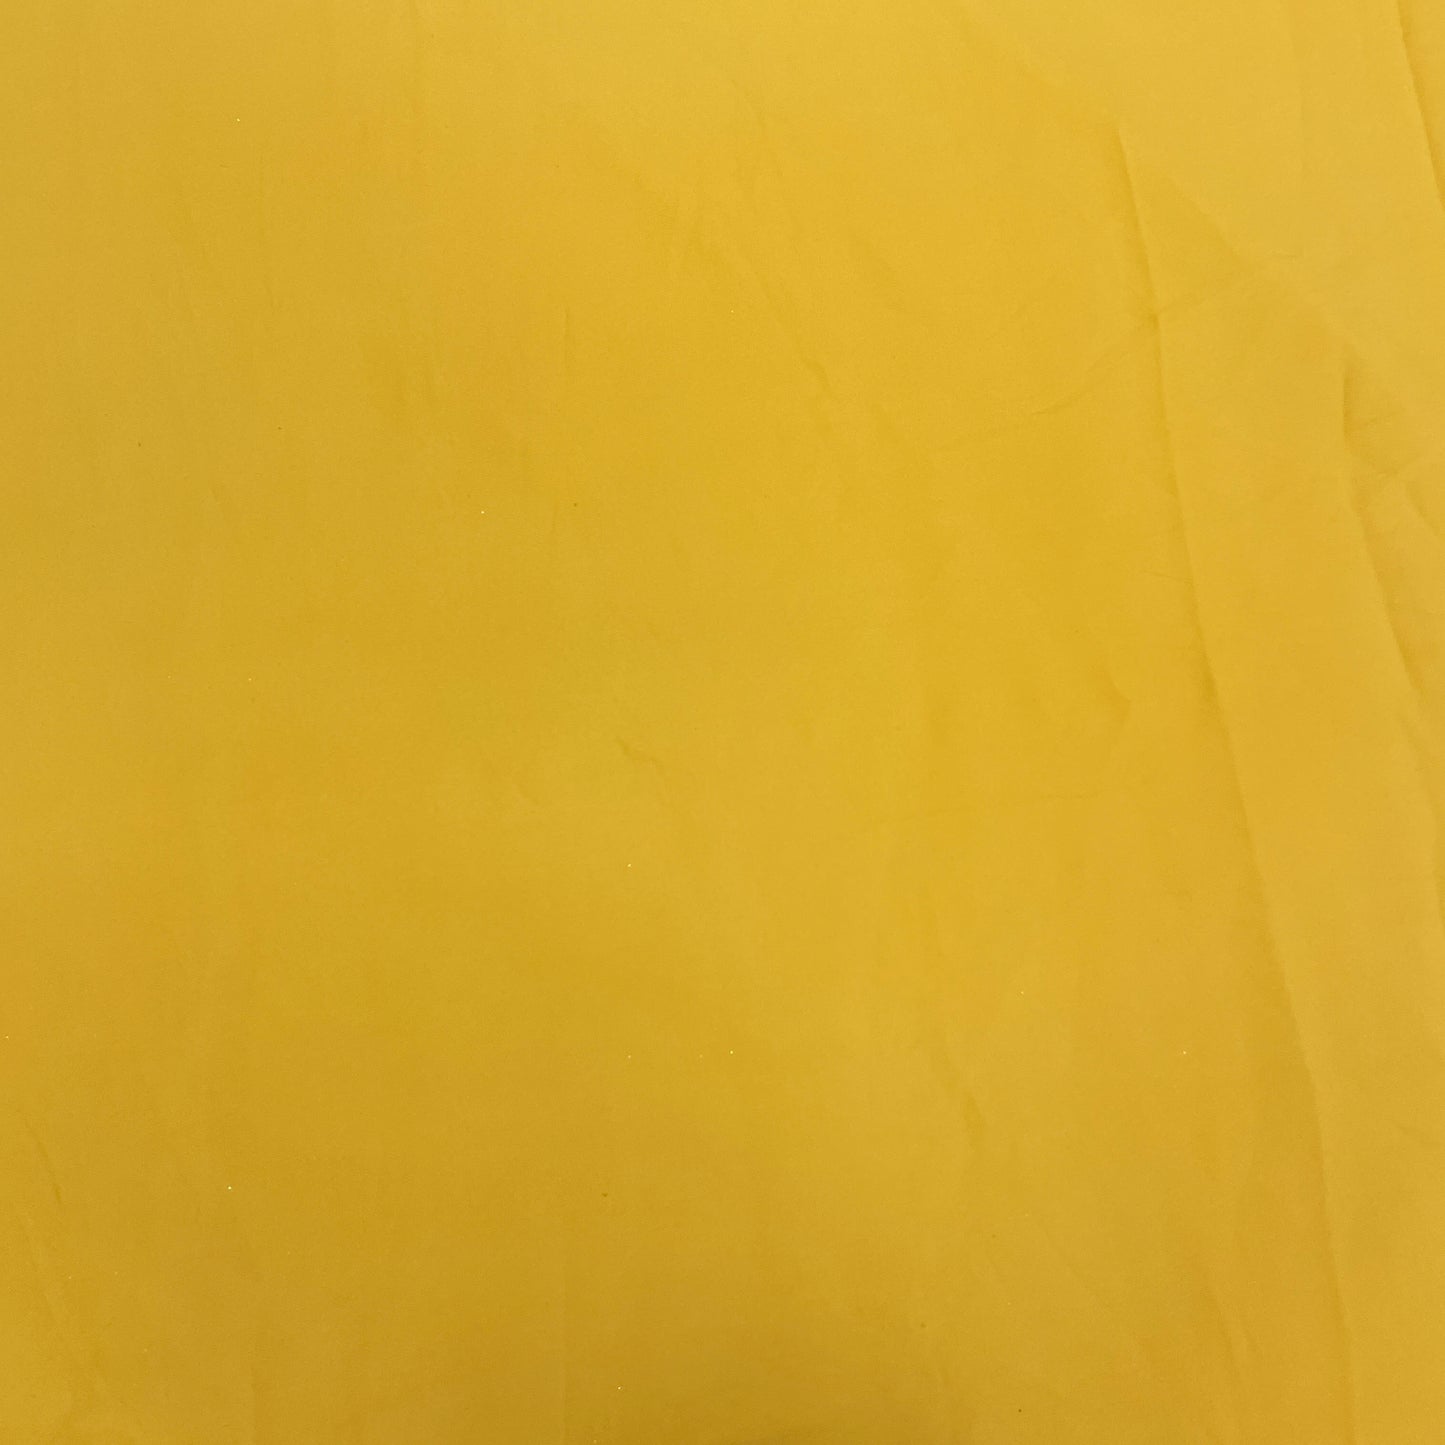 Light Yellow Solid Banana Crepe Fabric - TradeUNO